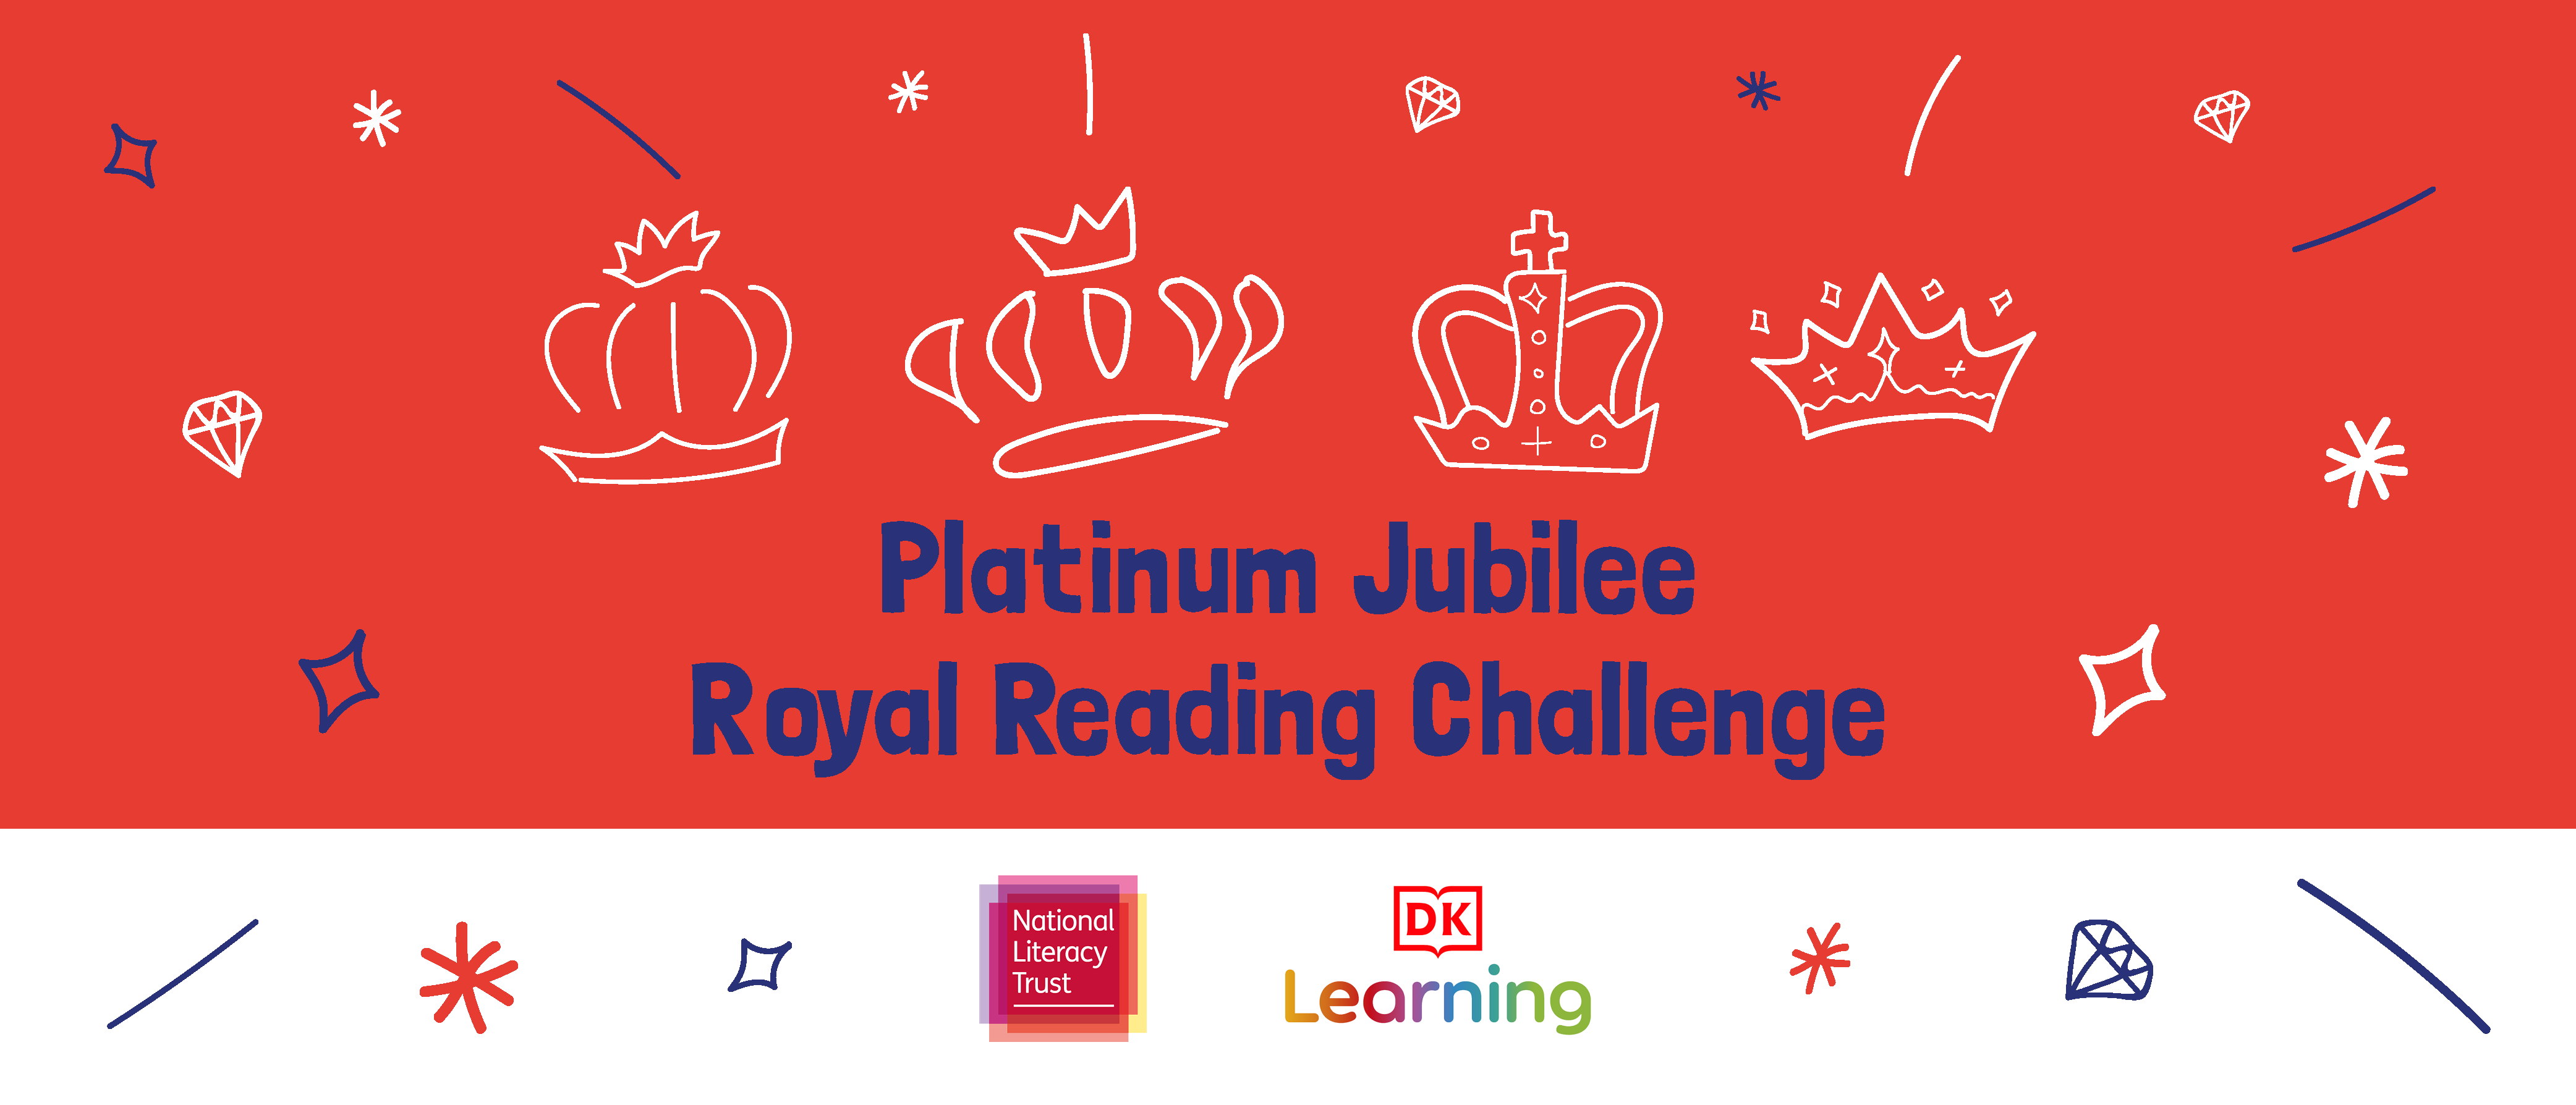 Royal Reading Challenge Platinum Jubilee 2022 National Literacy Trust